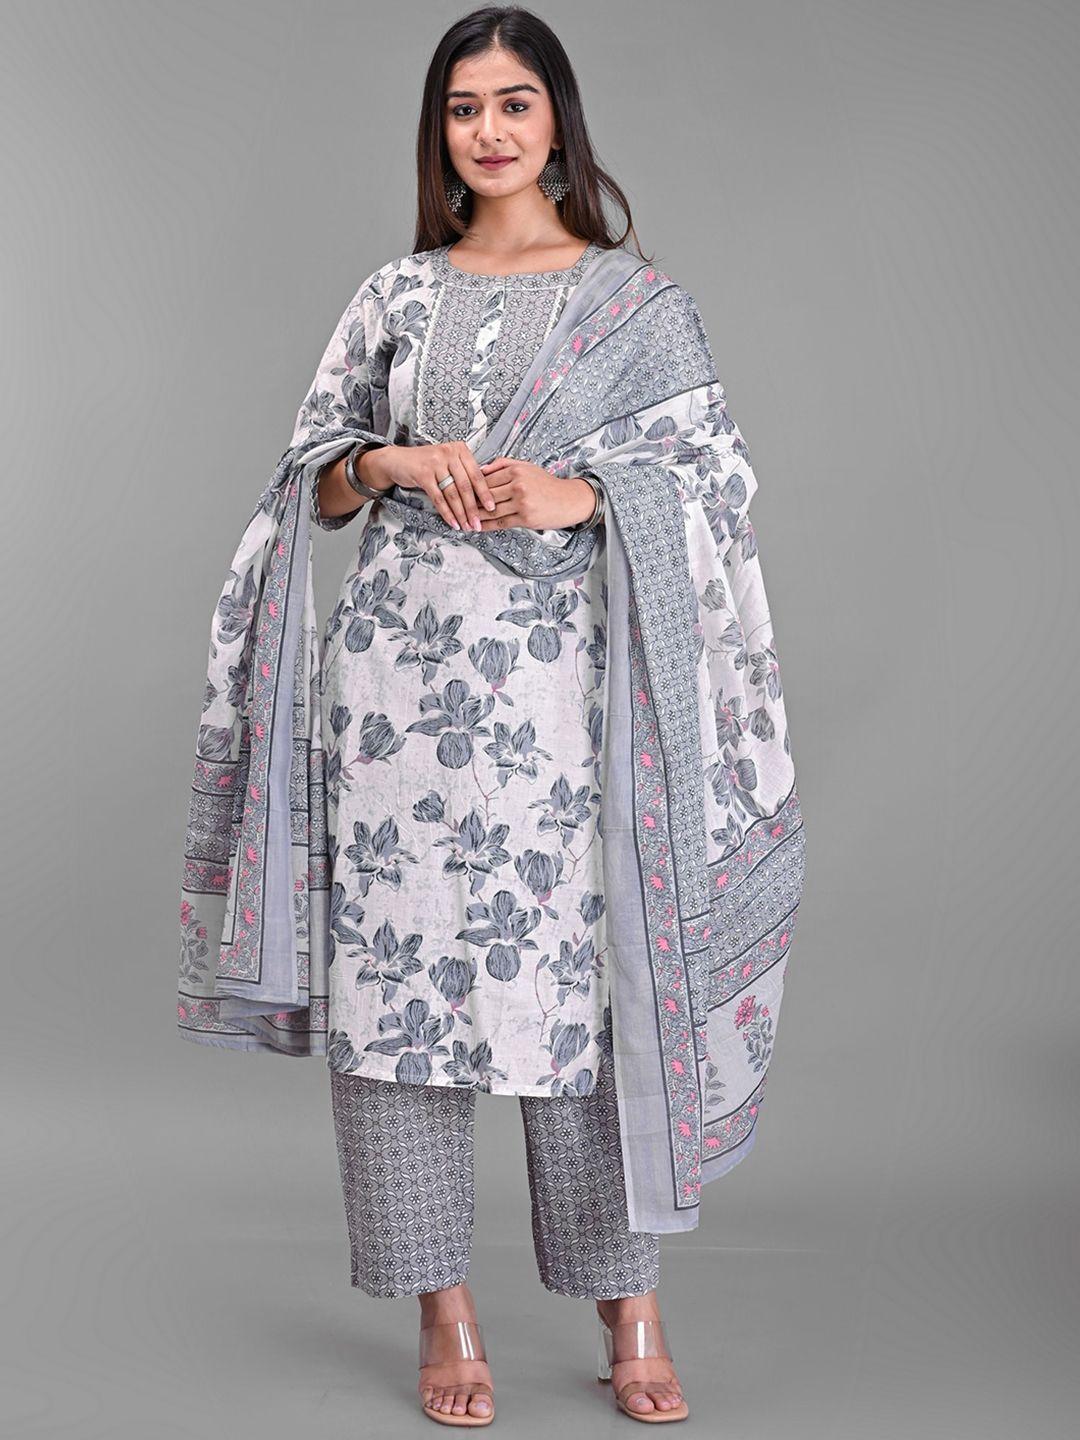 etnicawear women white floral printed pure cotton kurta with pyjamas & with dupatta